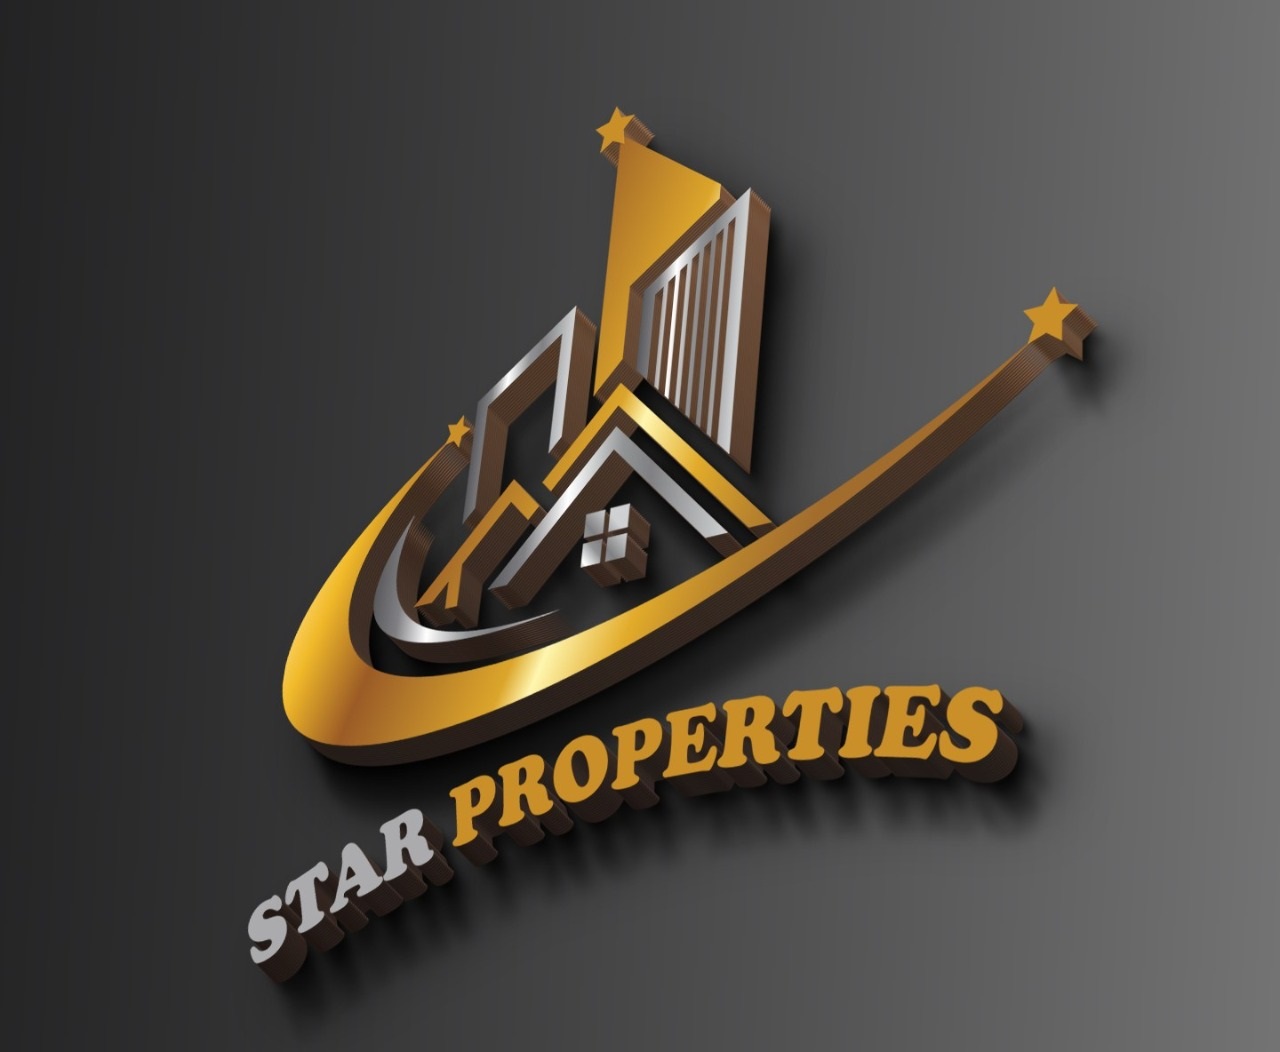 Star Properties